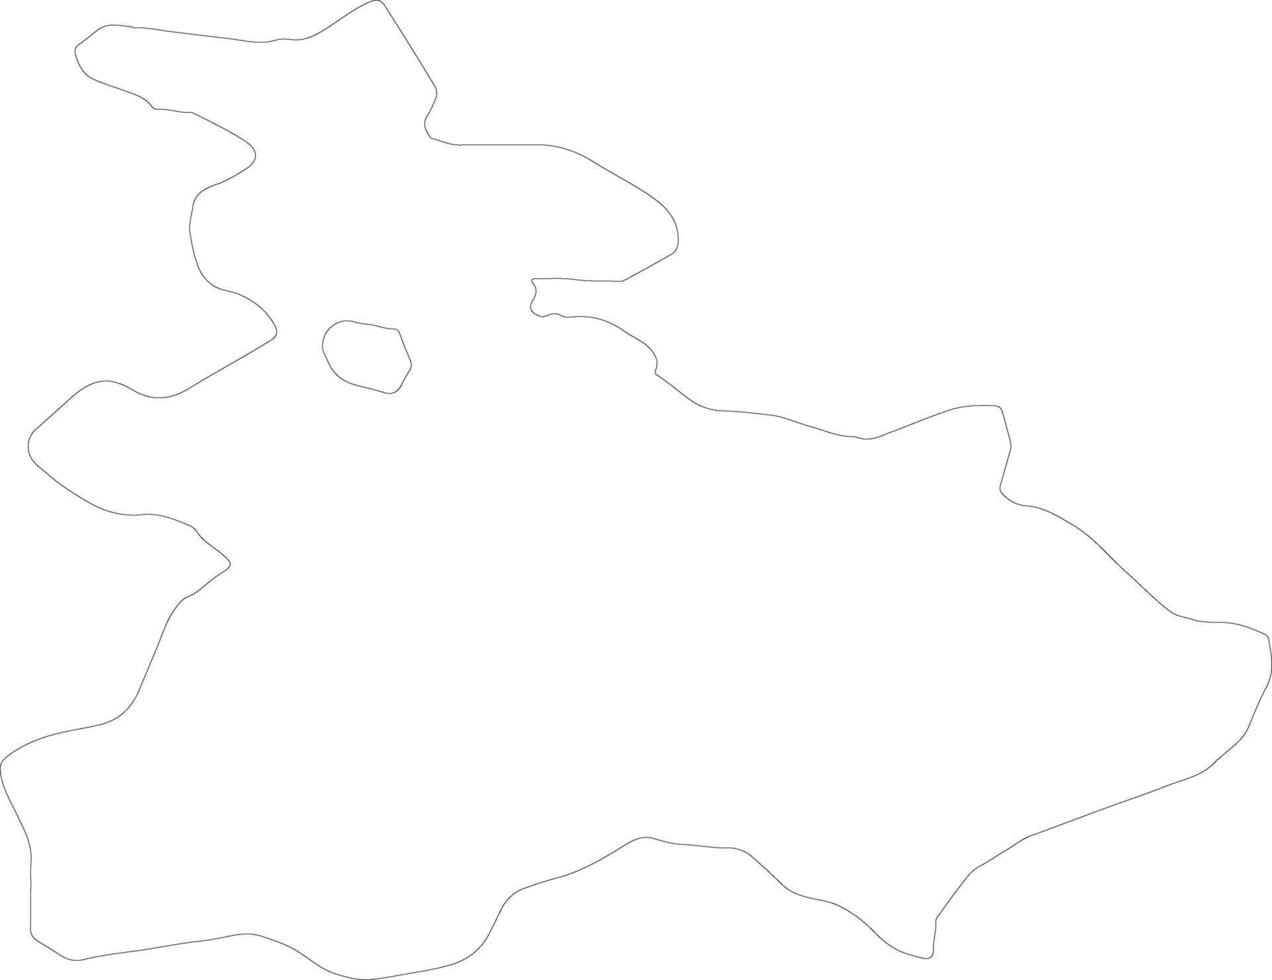 tavush Armenia schema carta geografica vettore